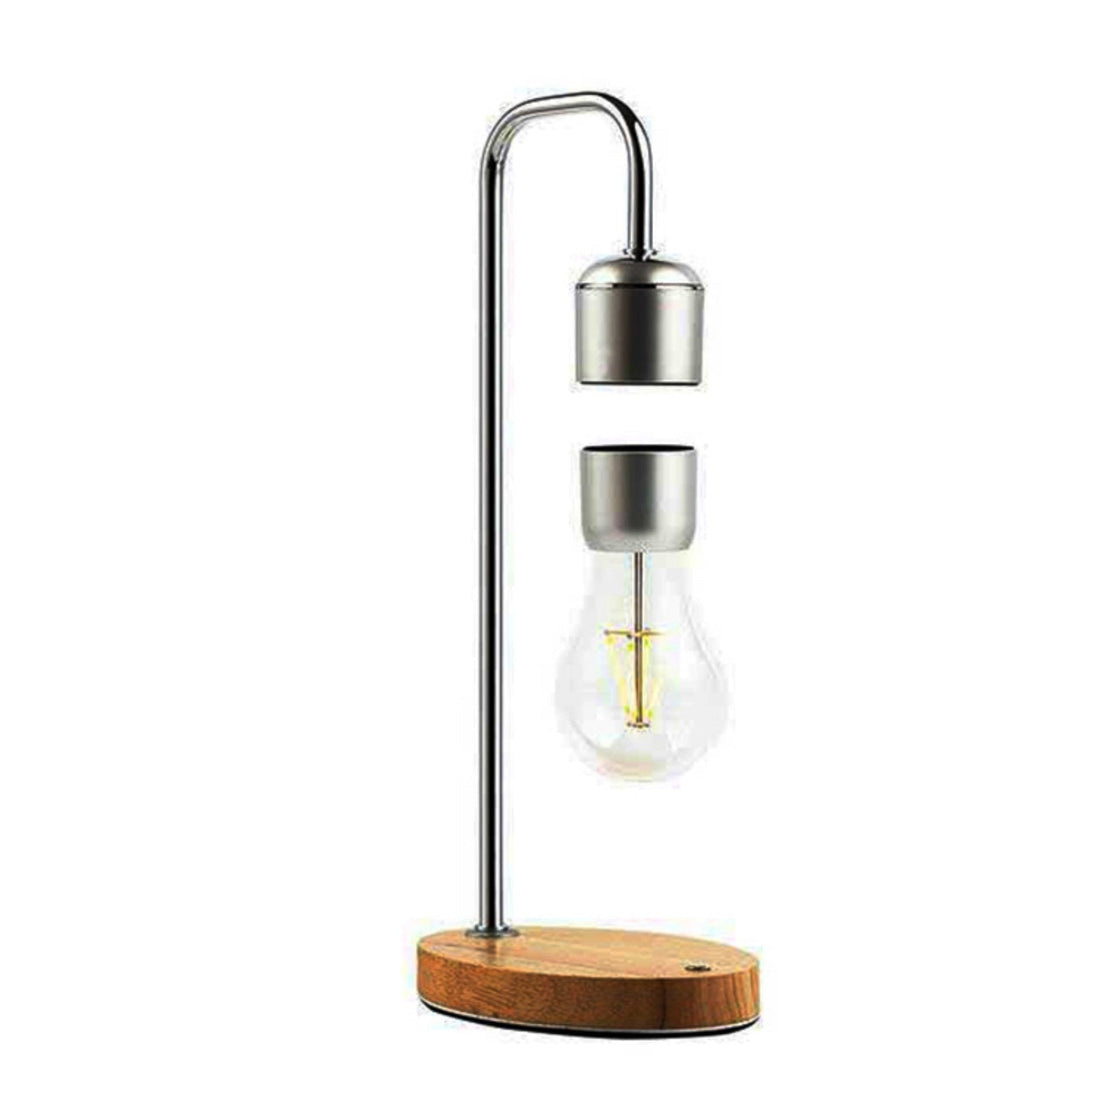 Levitating Smart Lamp | HomeHarborz